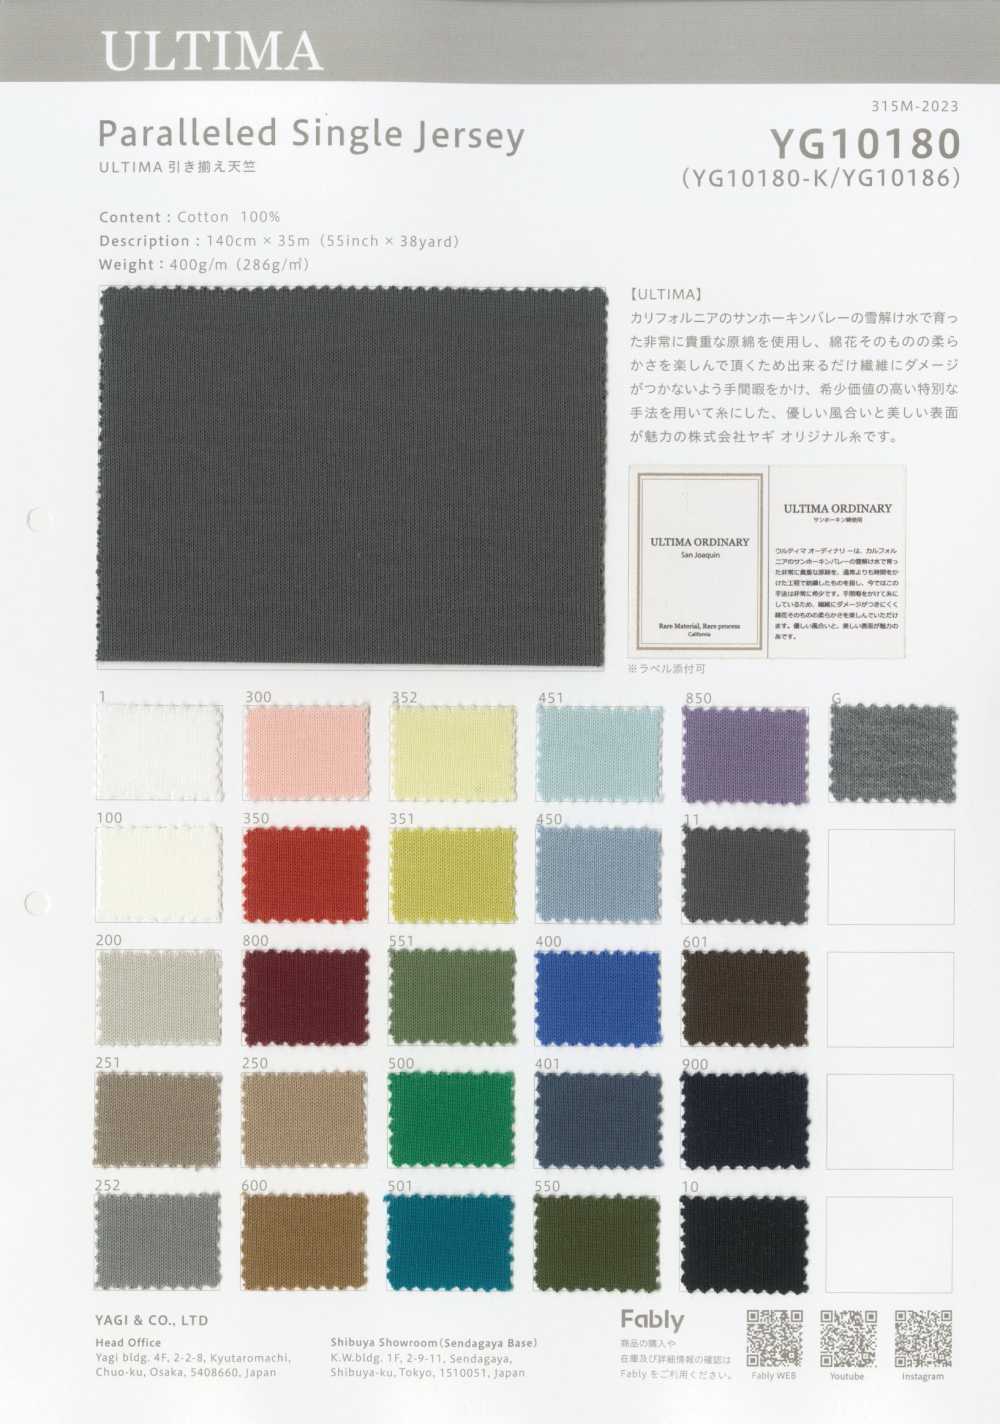 YG10180 ULTIMA Striped Jersey[Textile / Fabric] YAGI